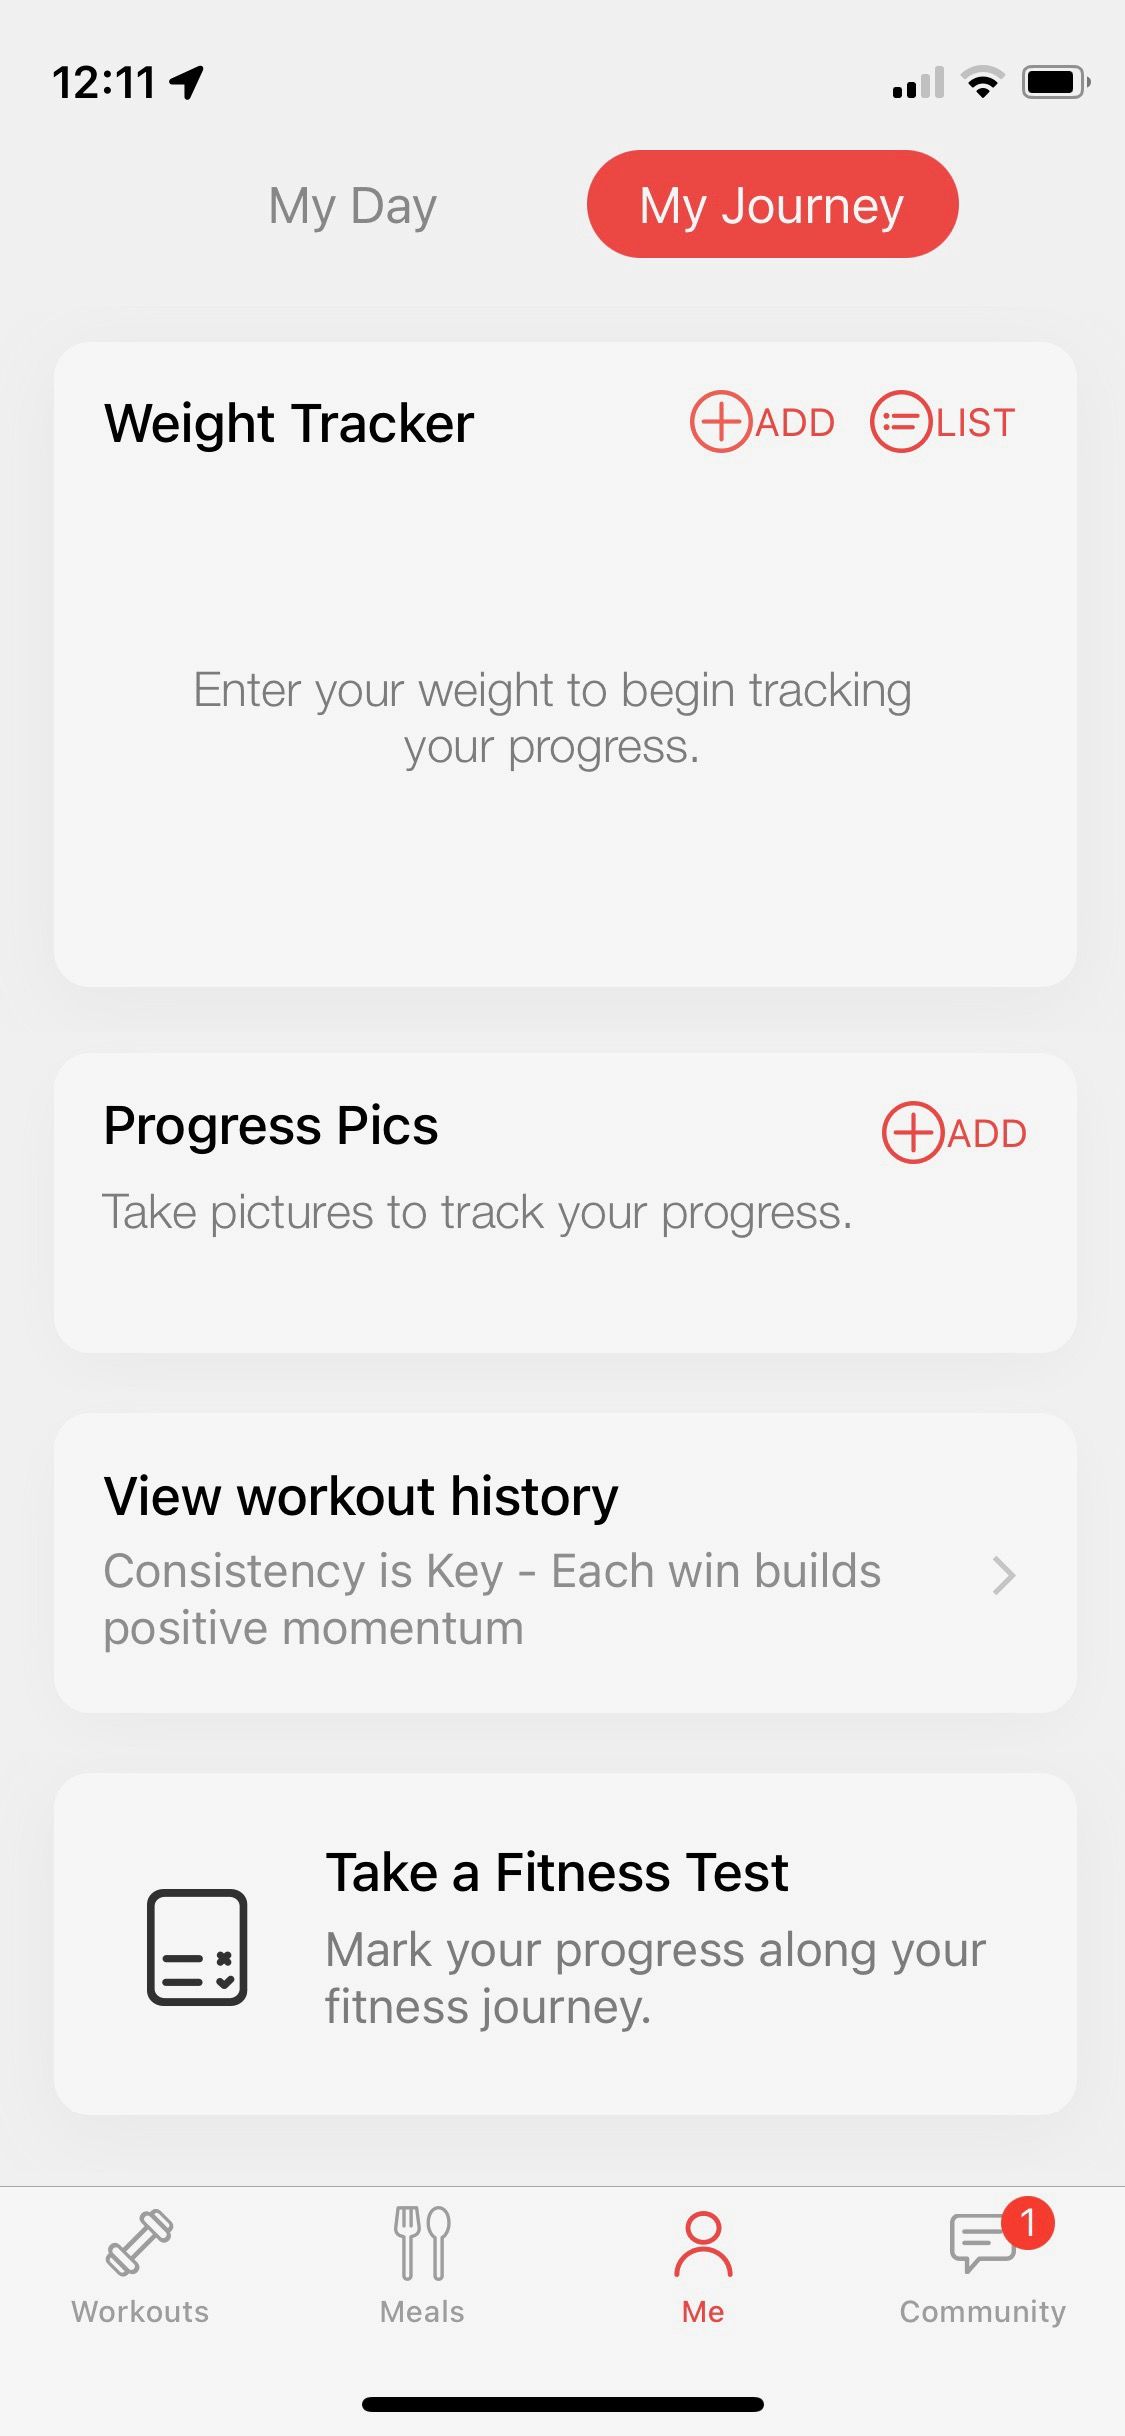 Screenshot from Jillian Michaels app showing weight tracker tool